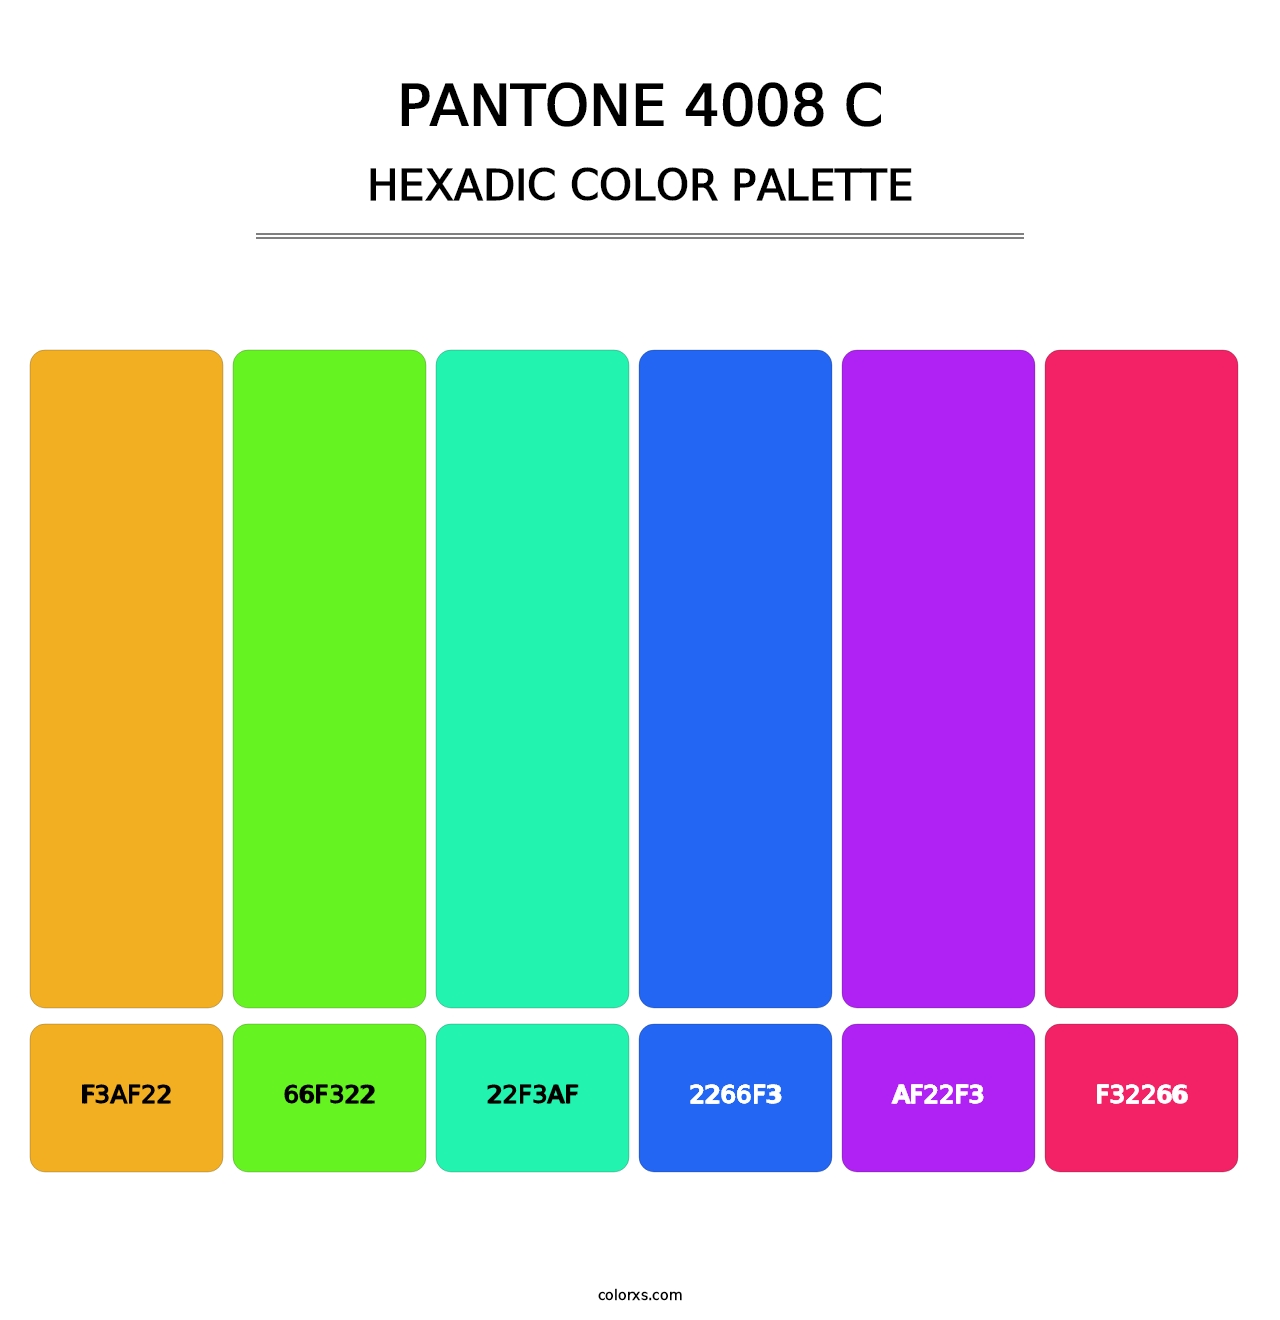 PANTONE 4008 C - Hexadic Color Palette